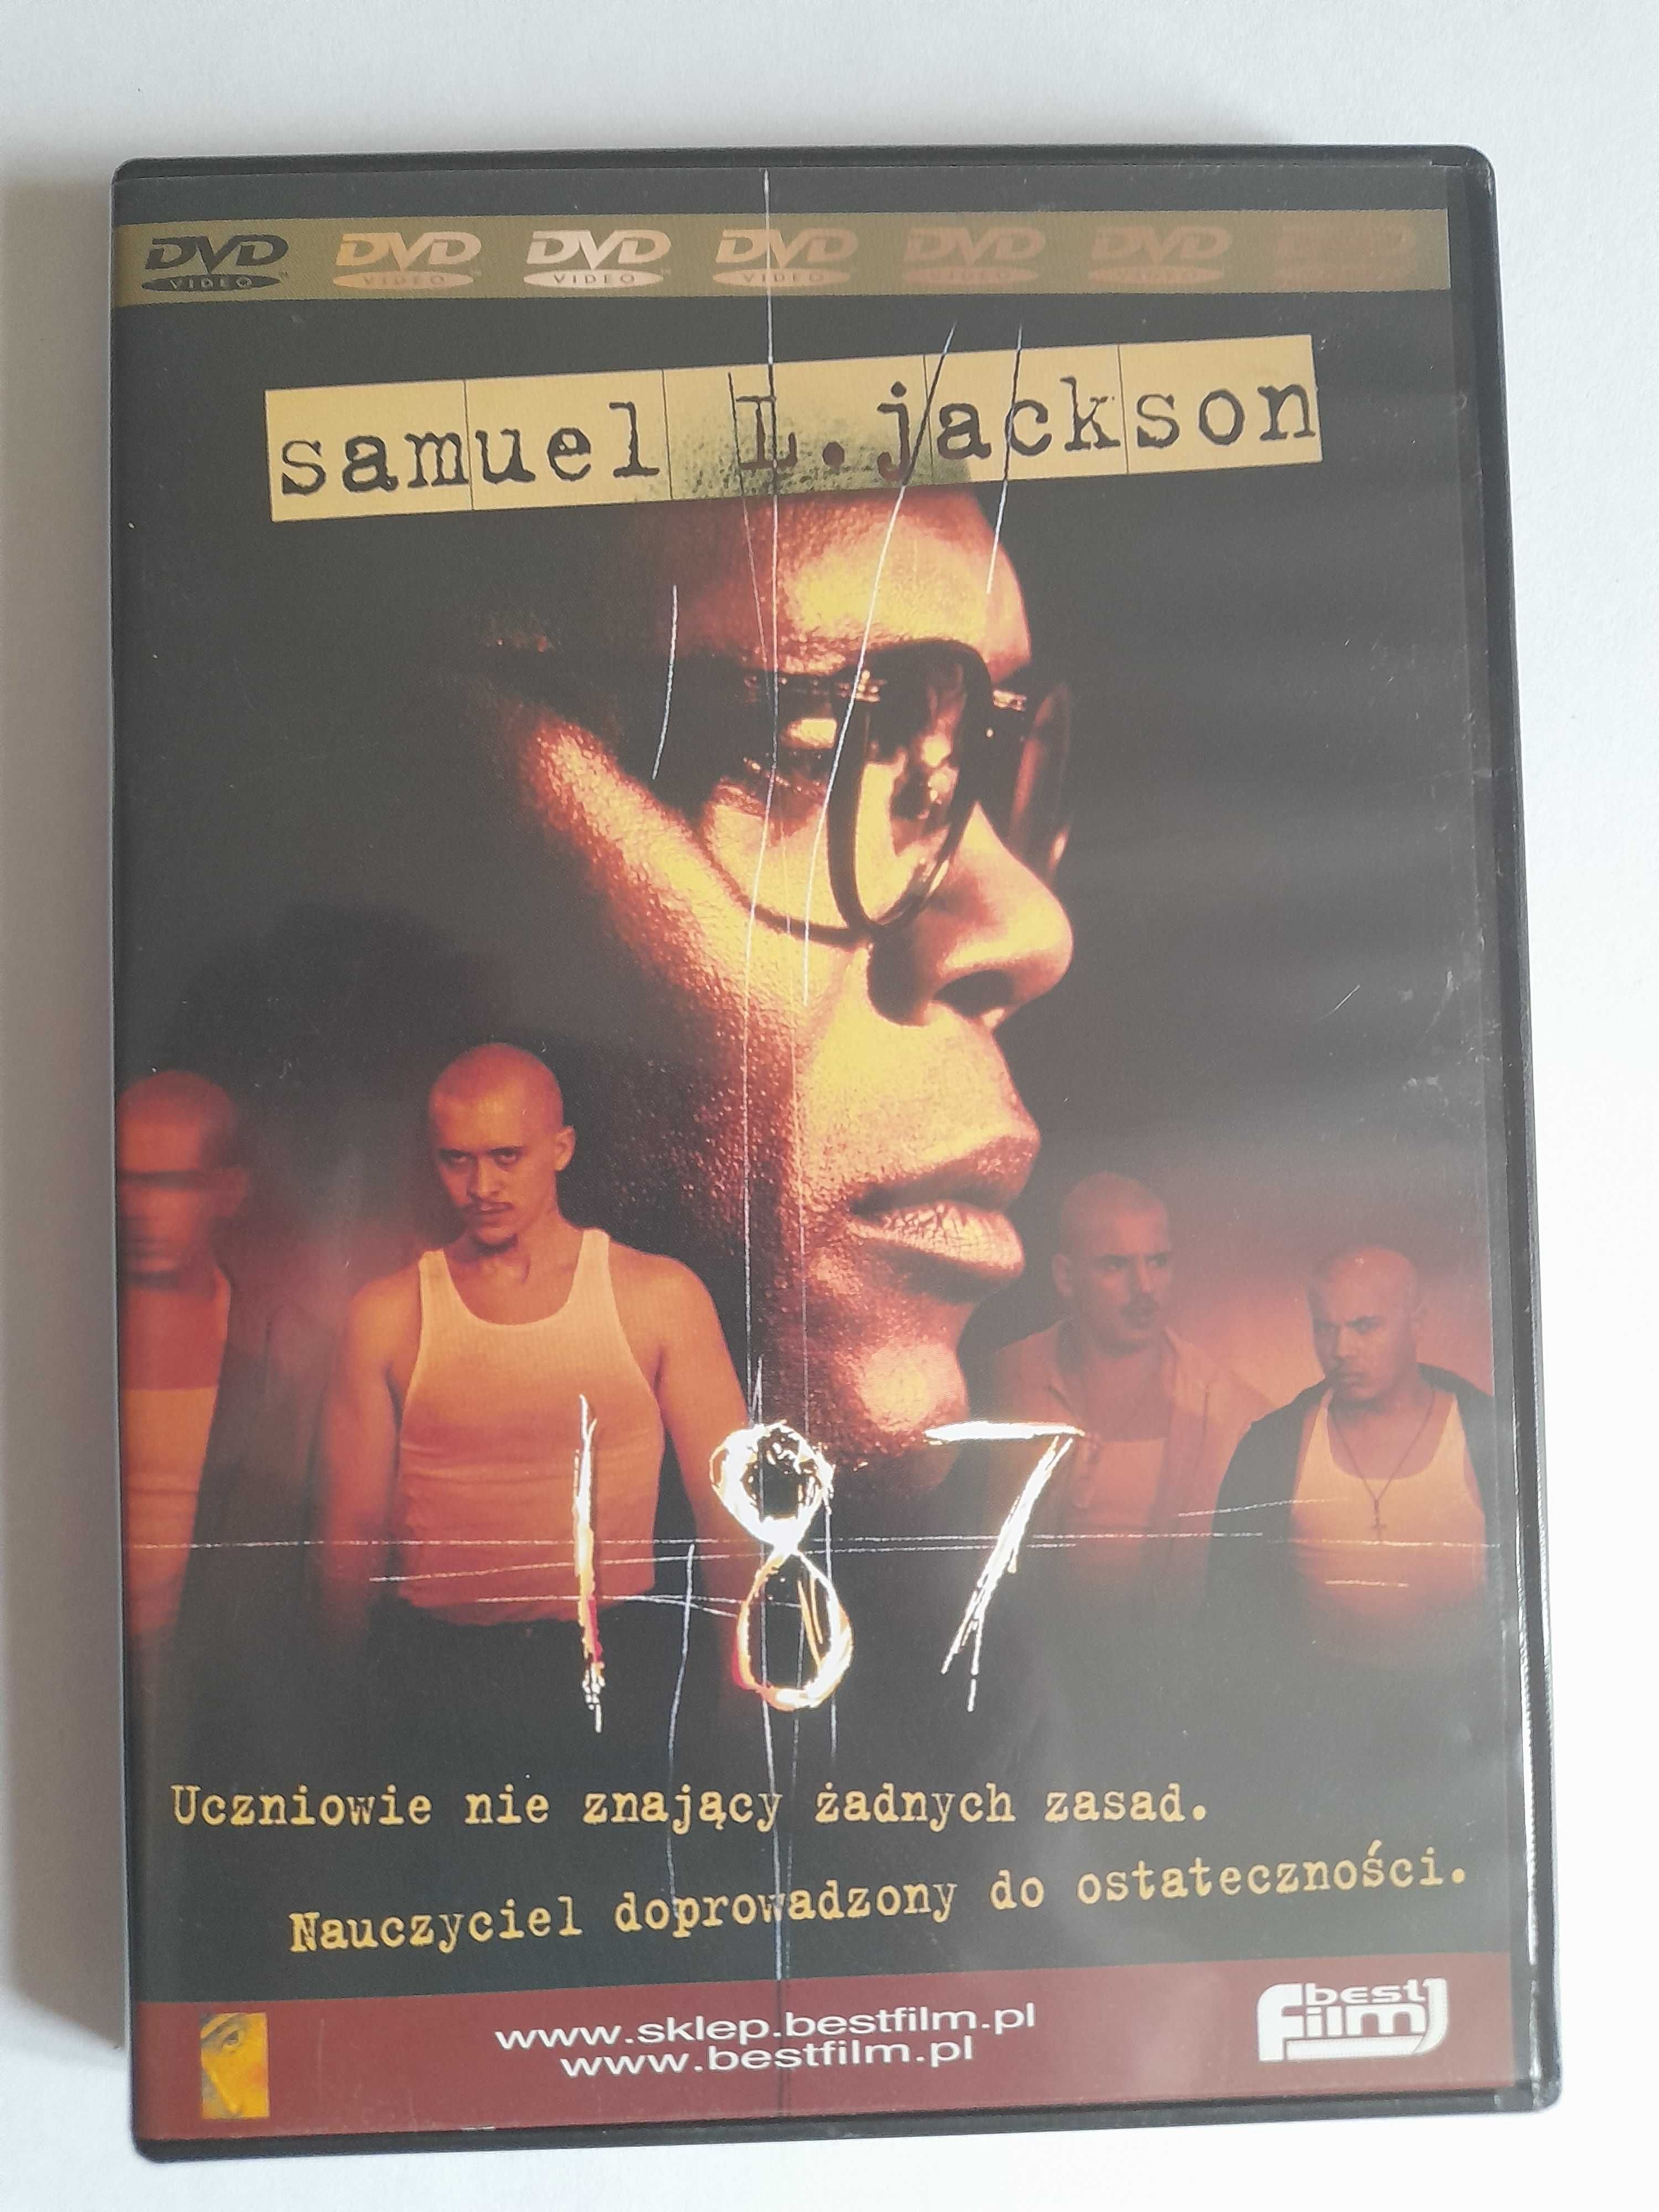 Film 187 płyta DVD